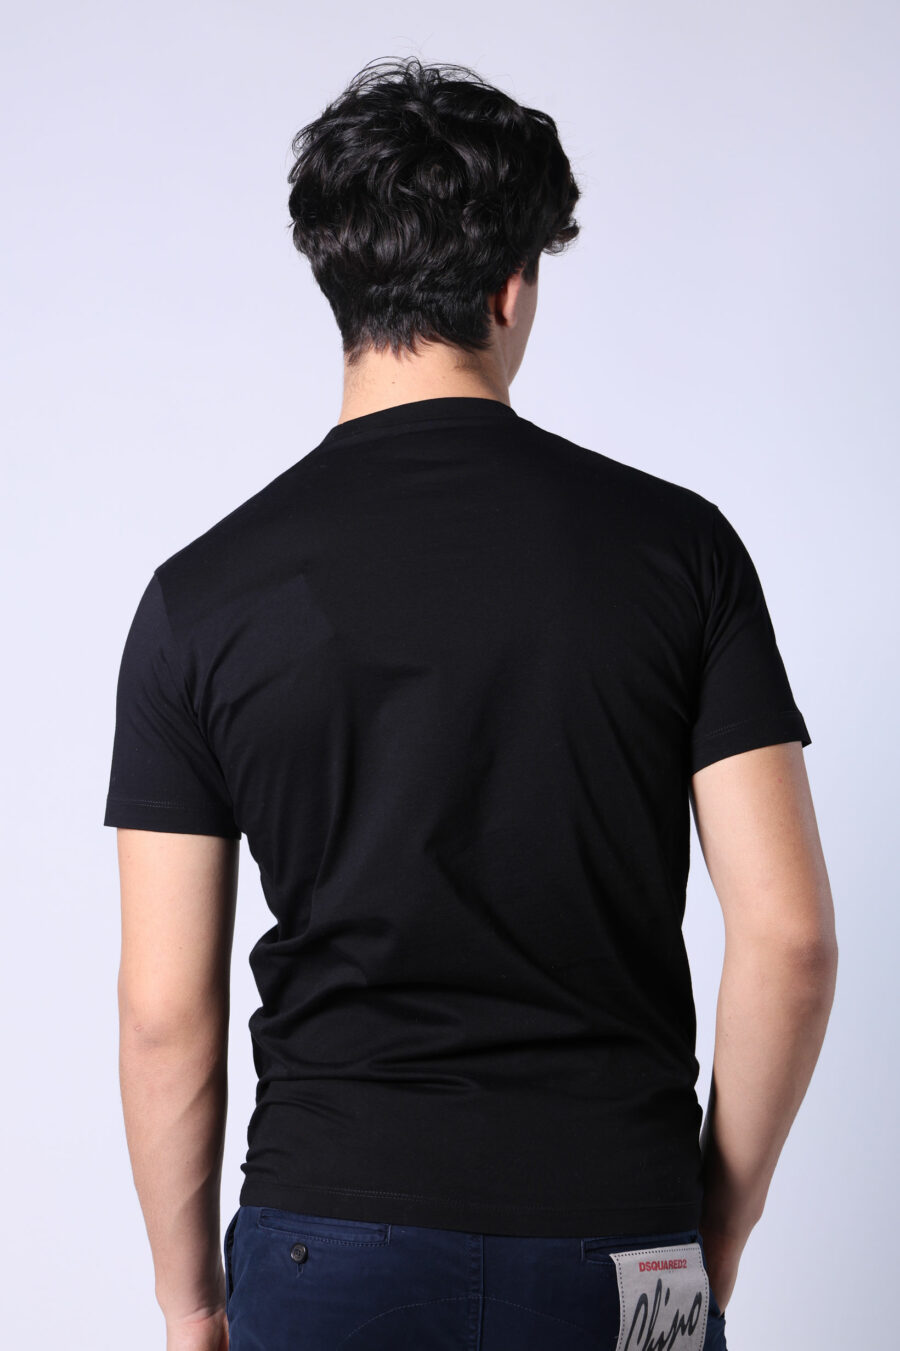 Camiseta negra con maxilogo rgb - Untitled Catalog 05466